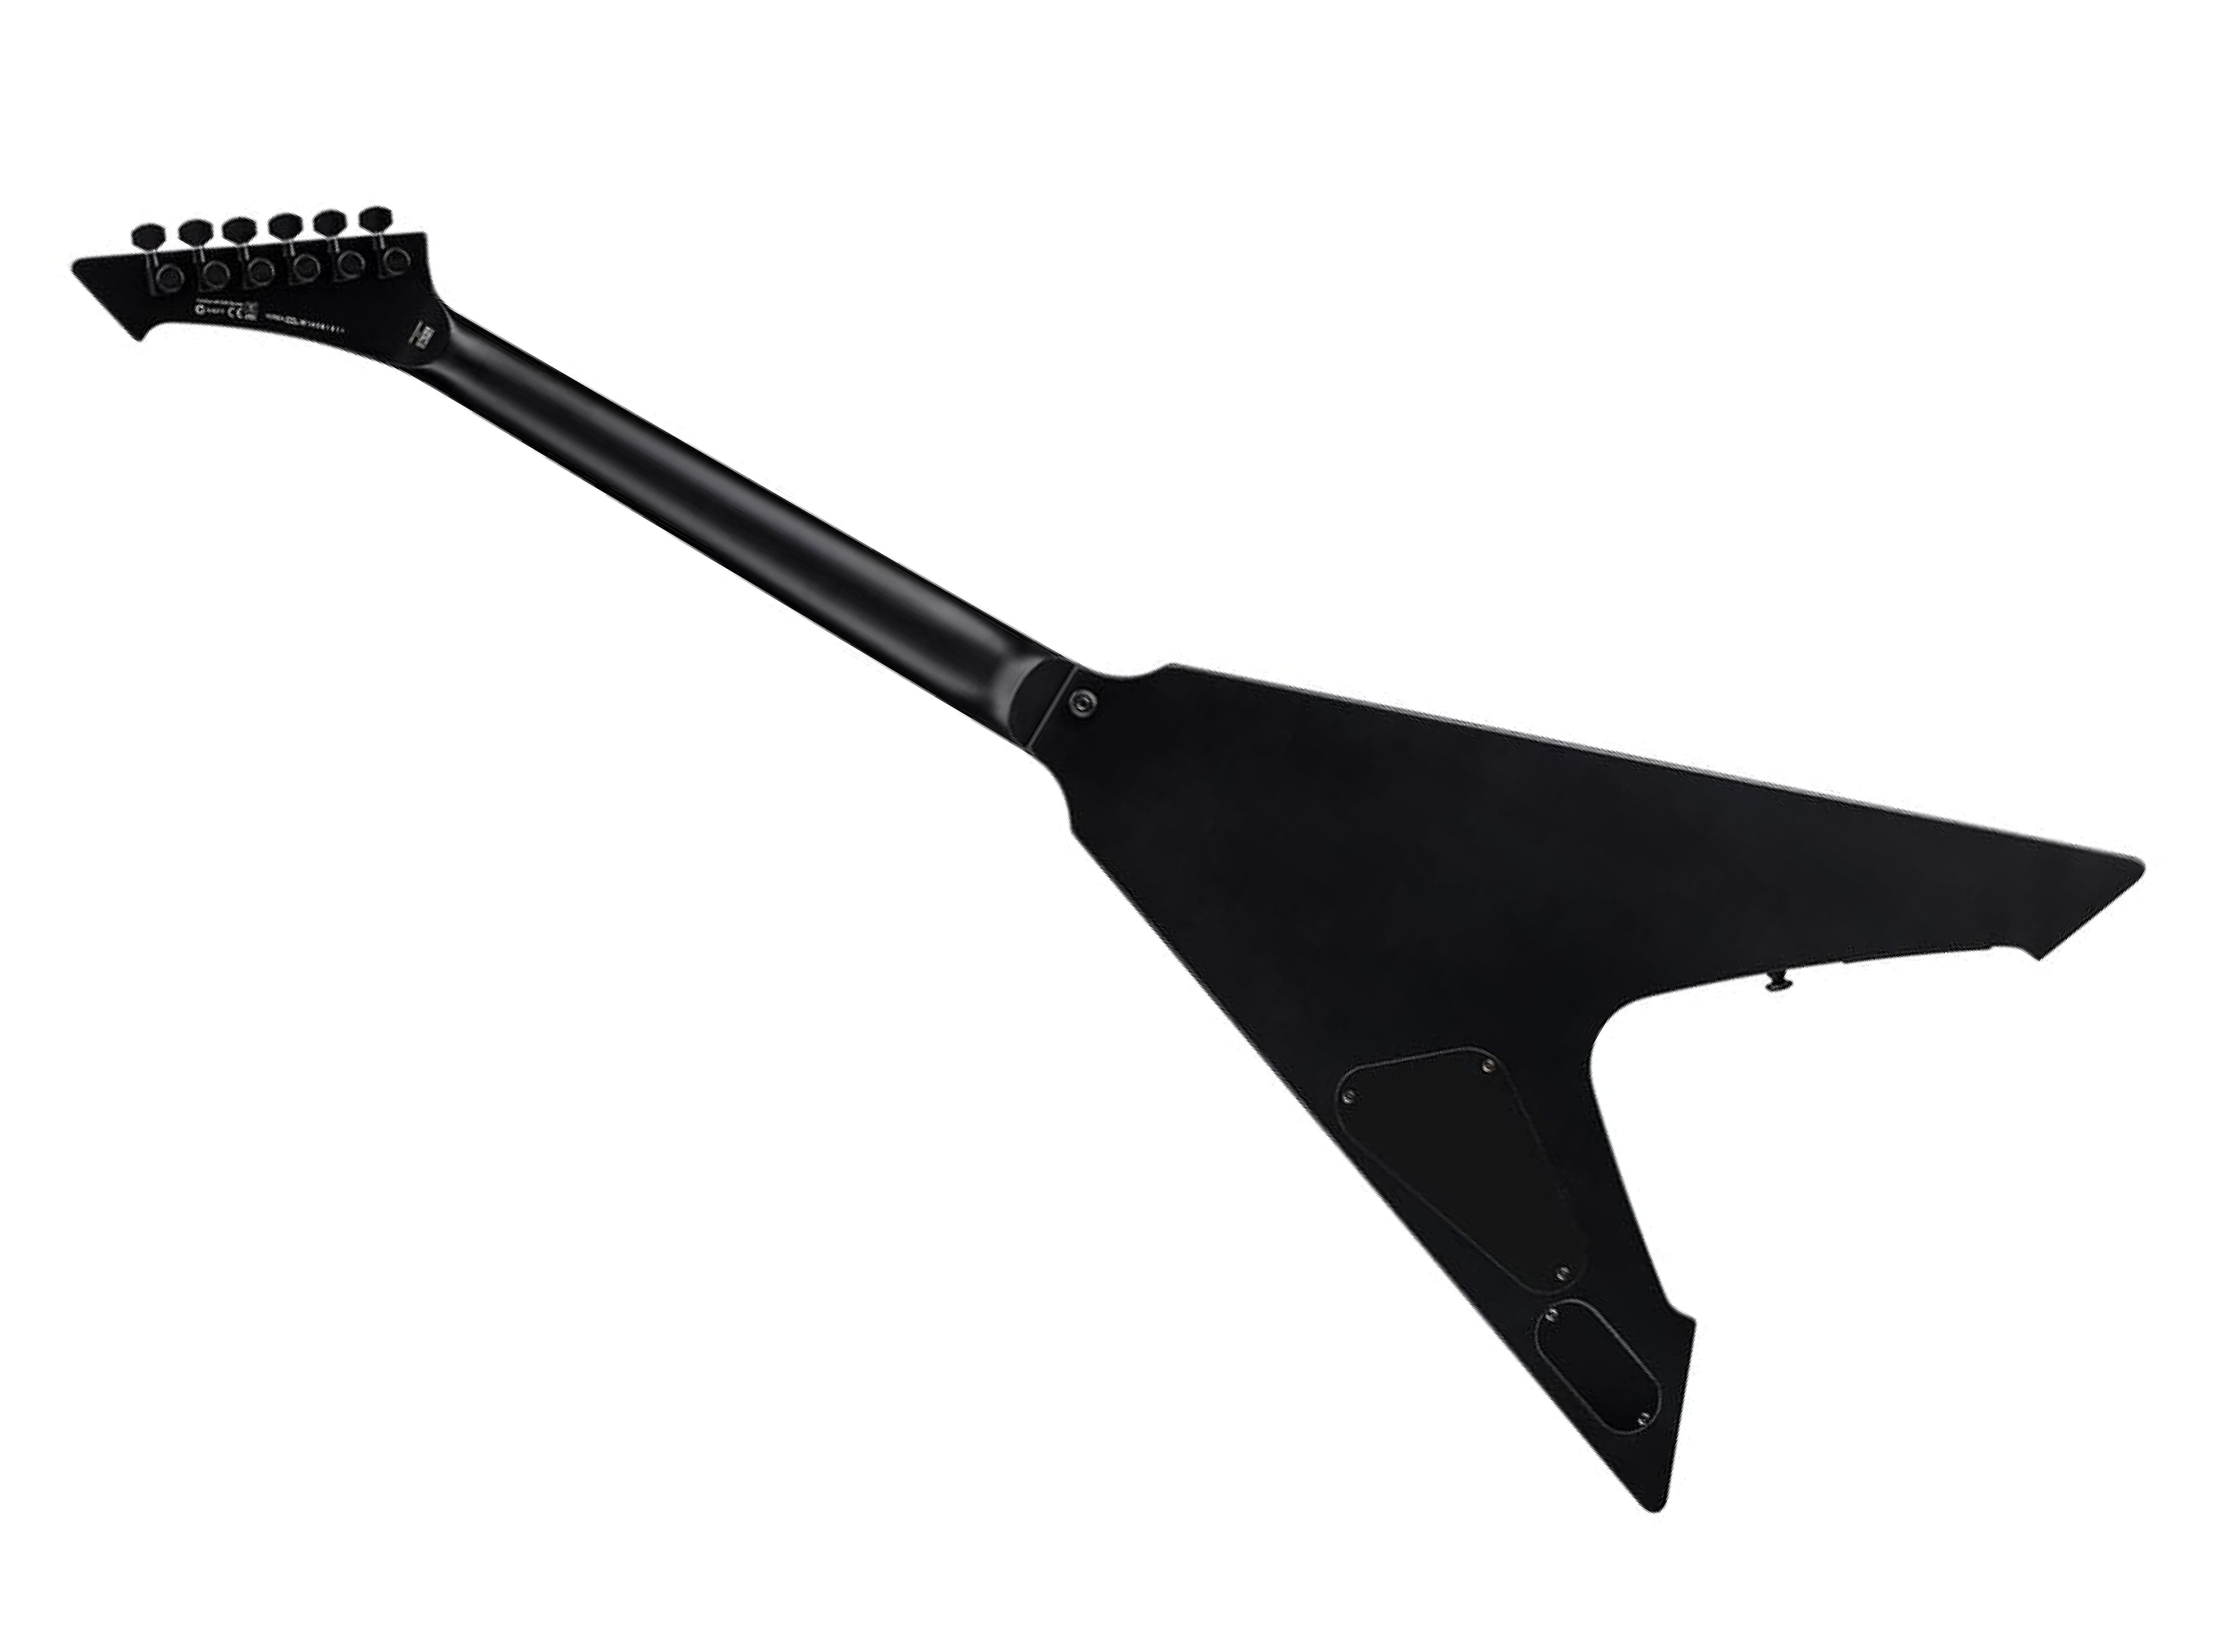 ESP LTD Vulture E-Gitarre BLKS James Hetfield